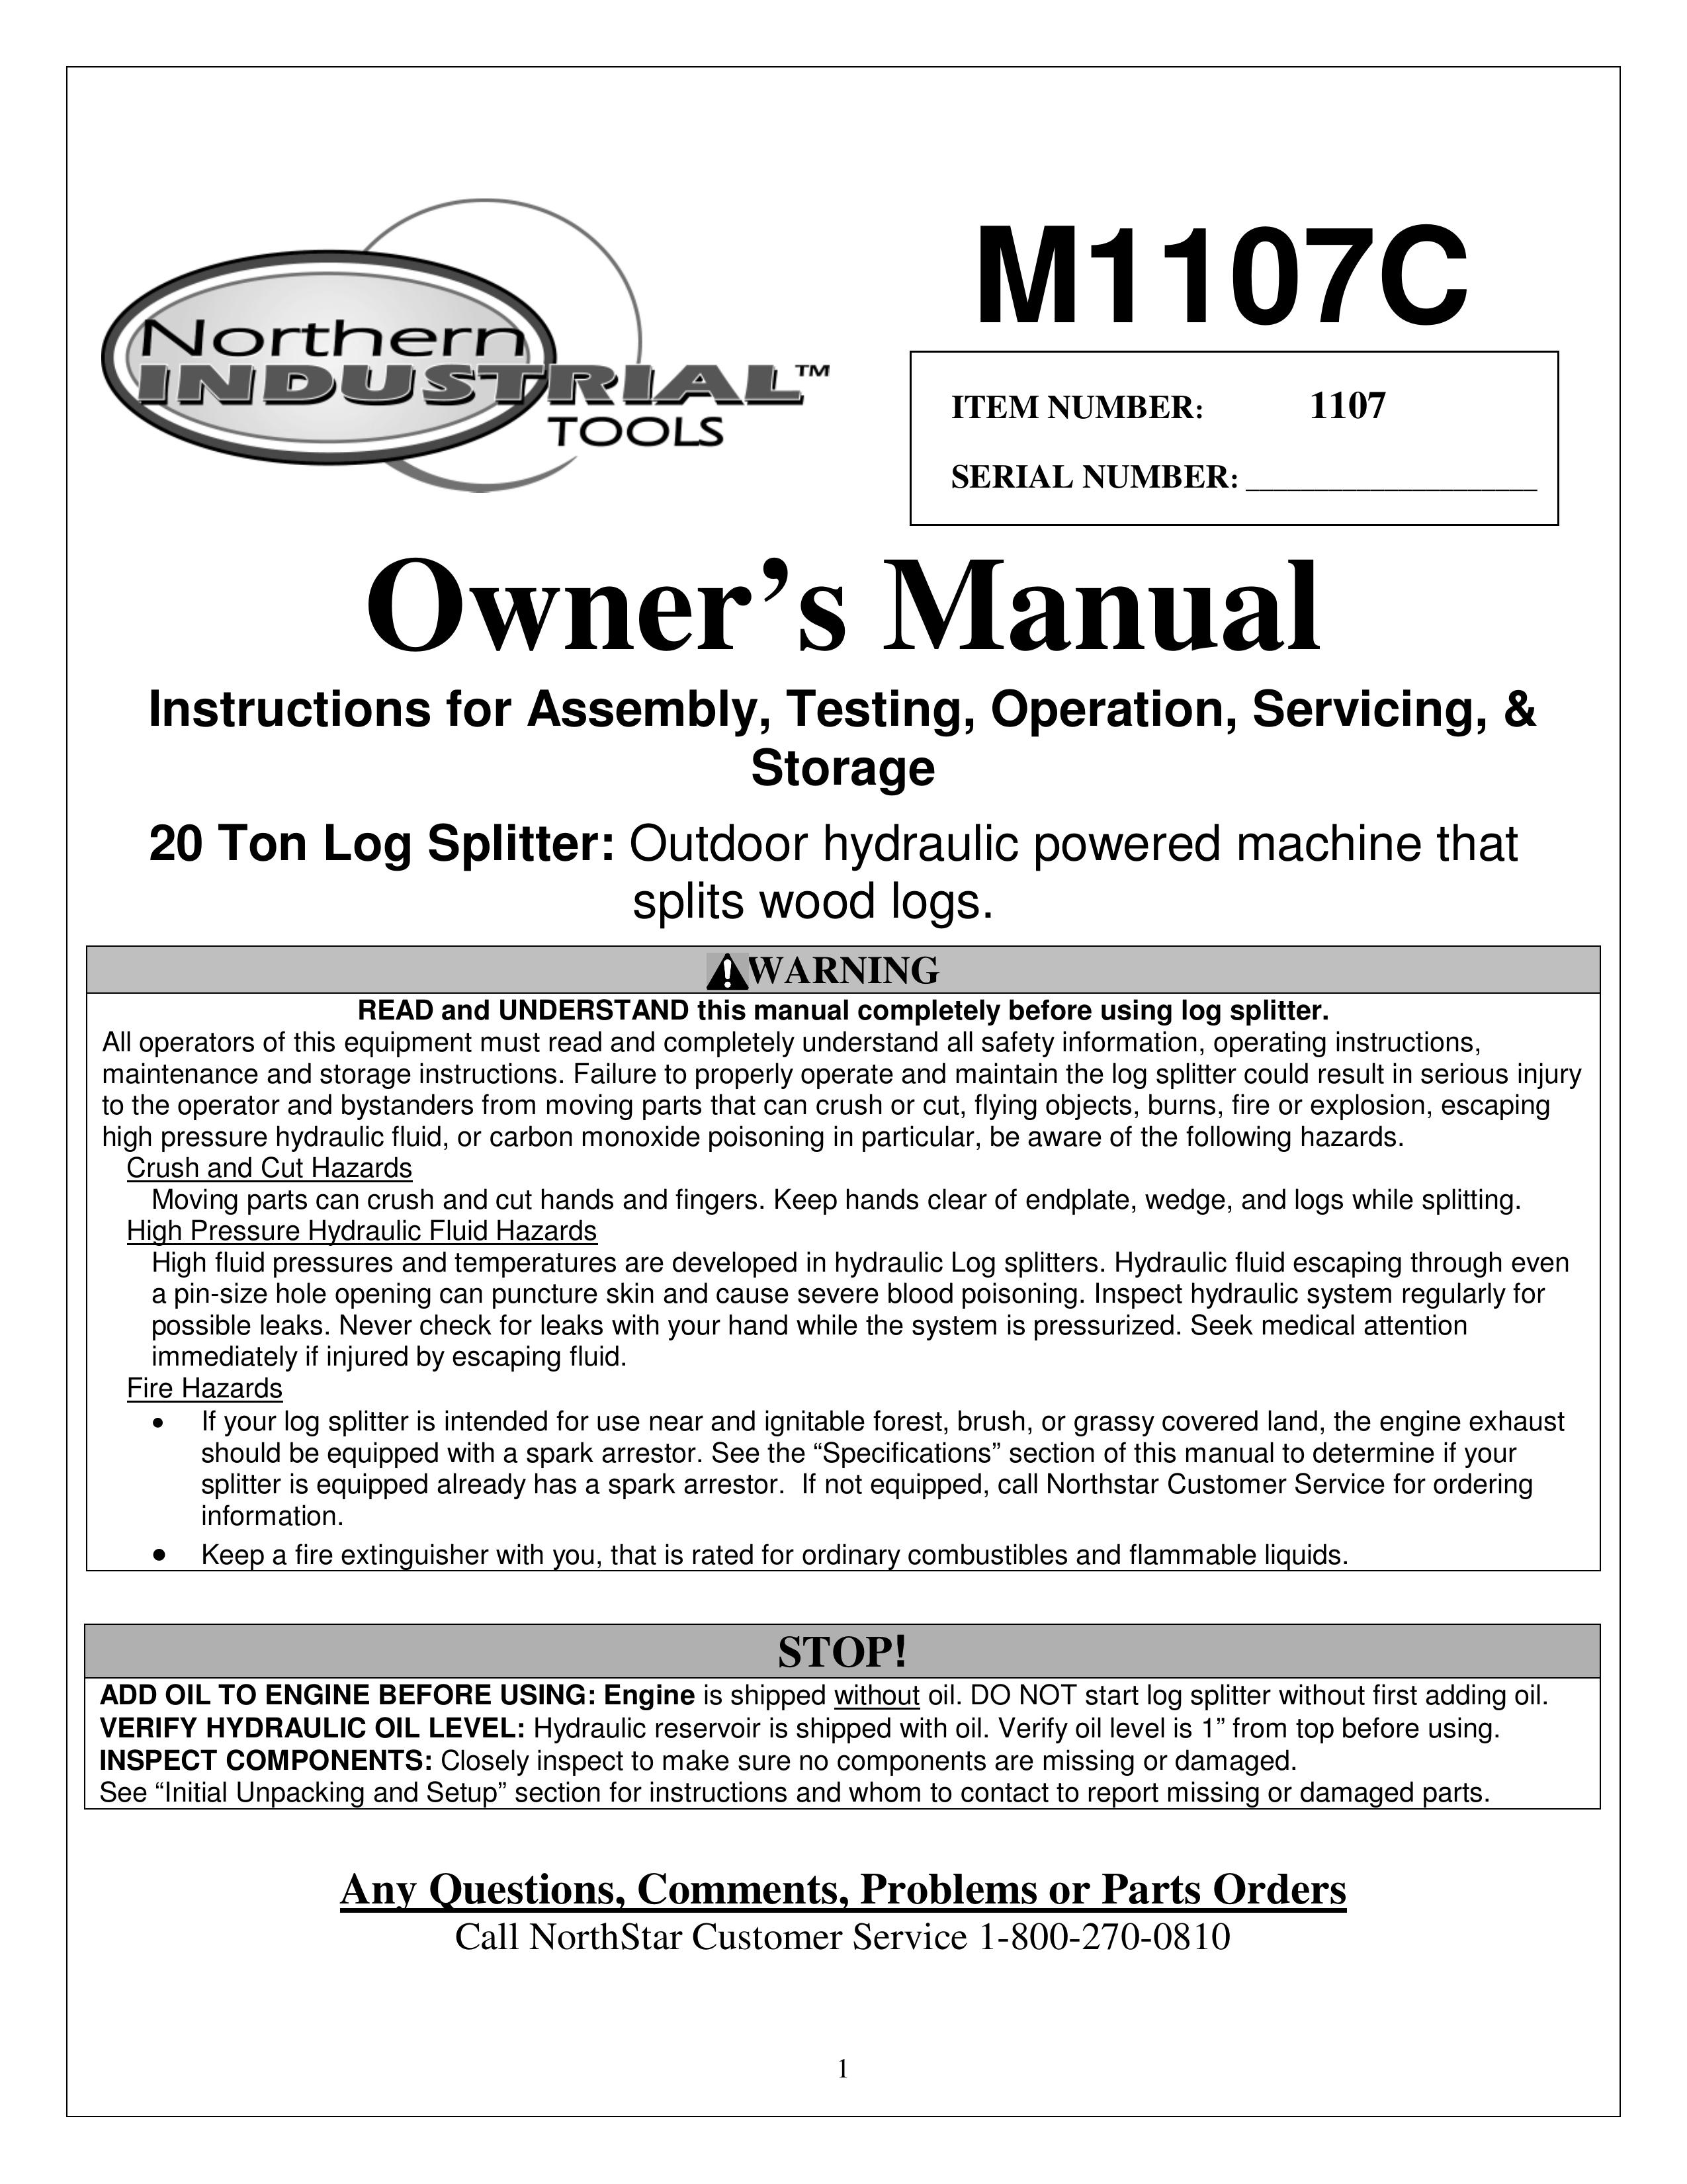 Northern Industrial Tools M1107C Log Splitter User Manual